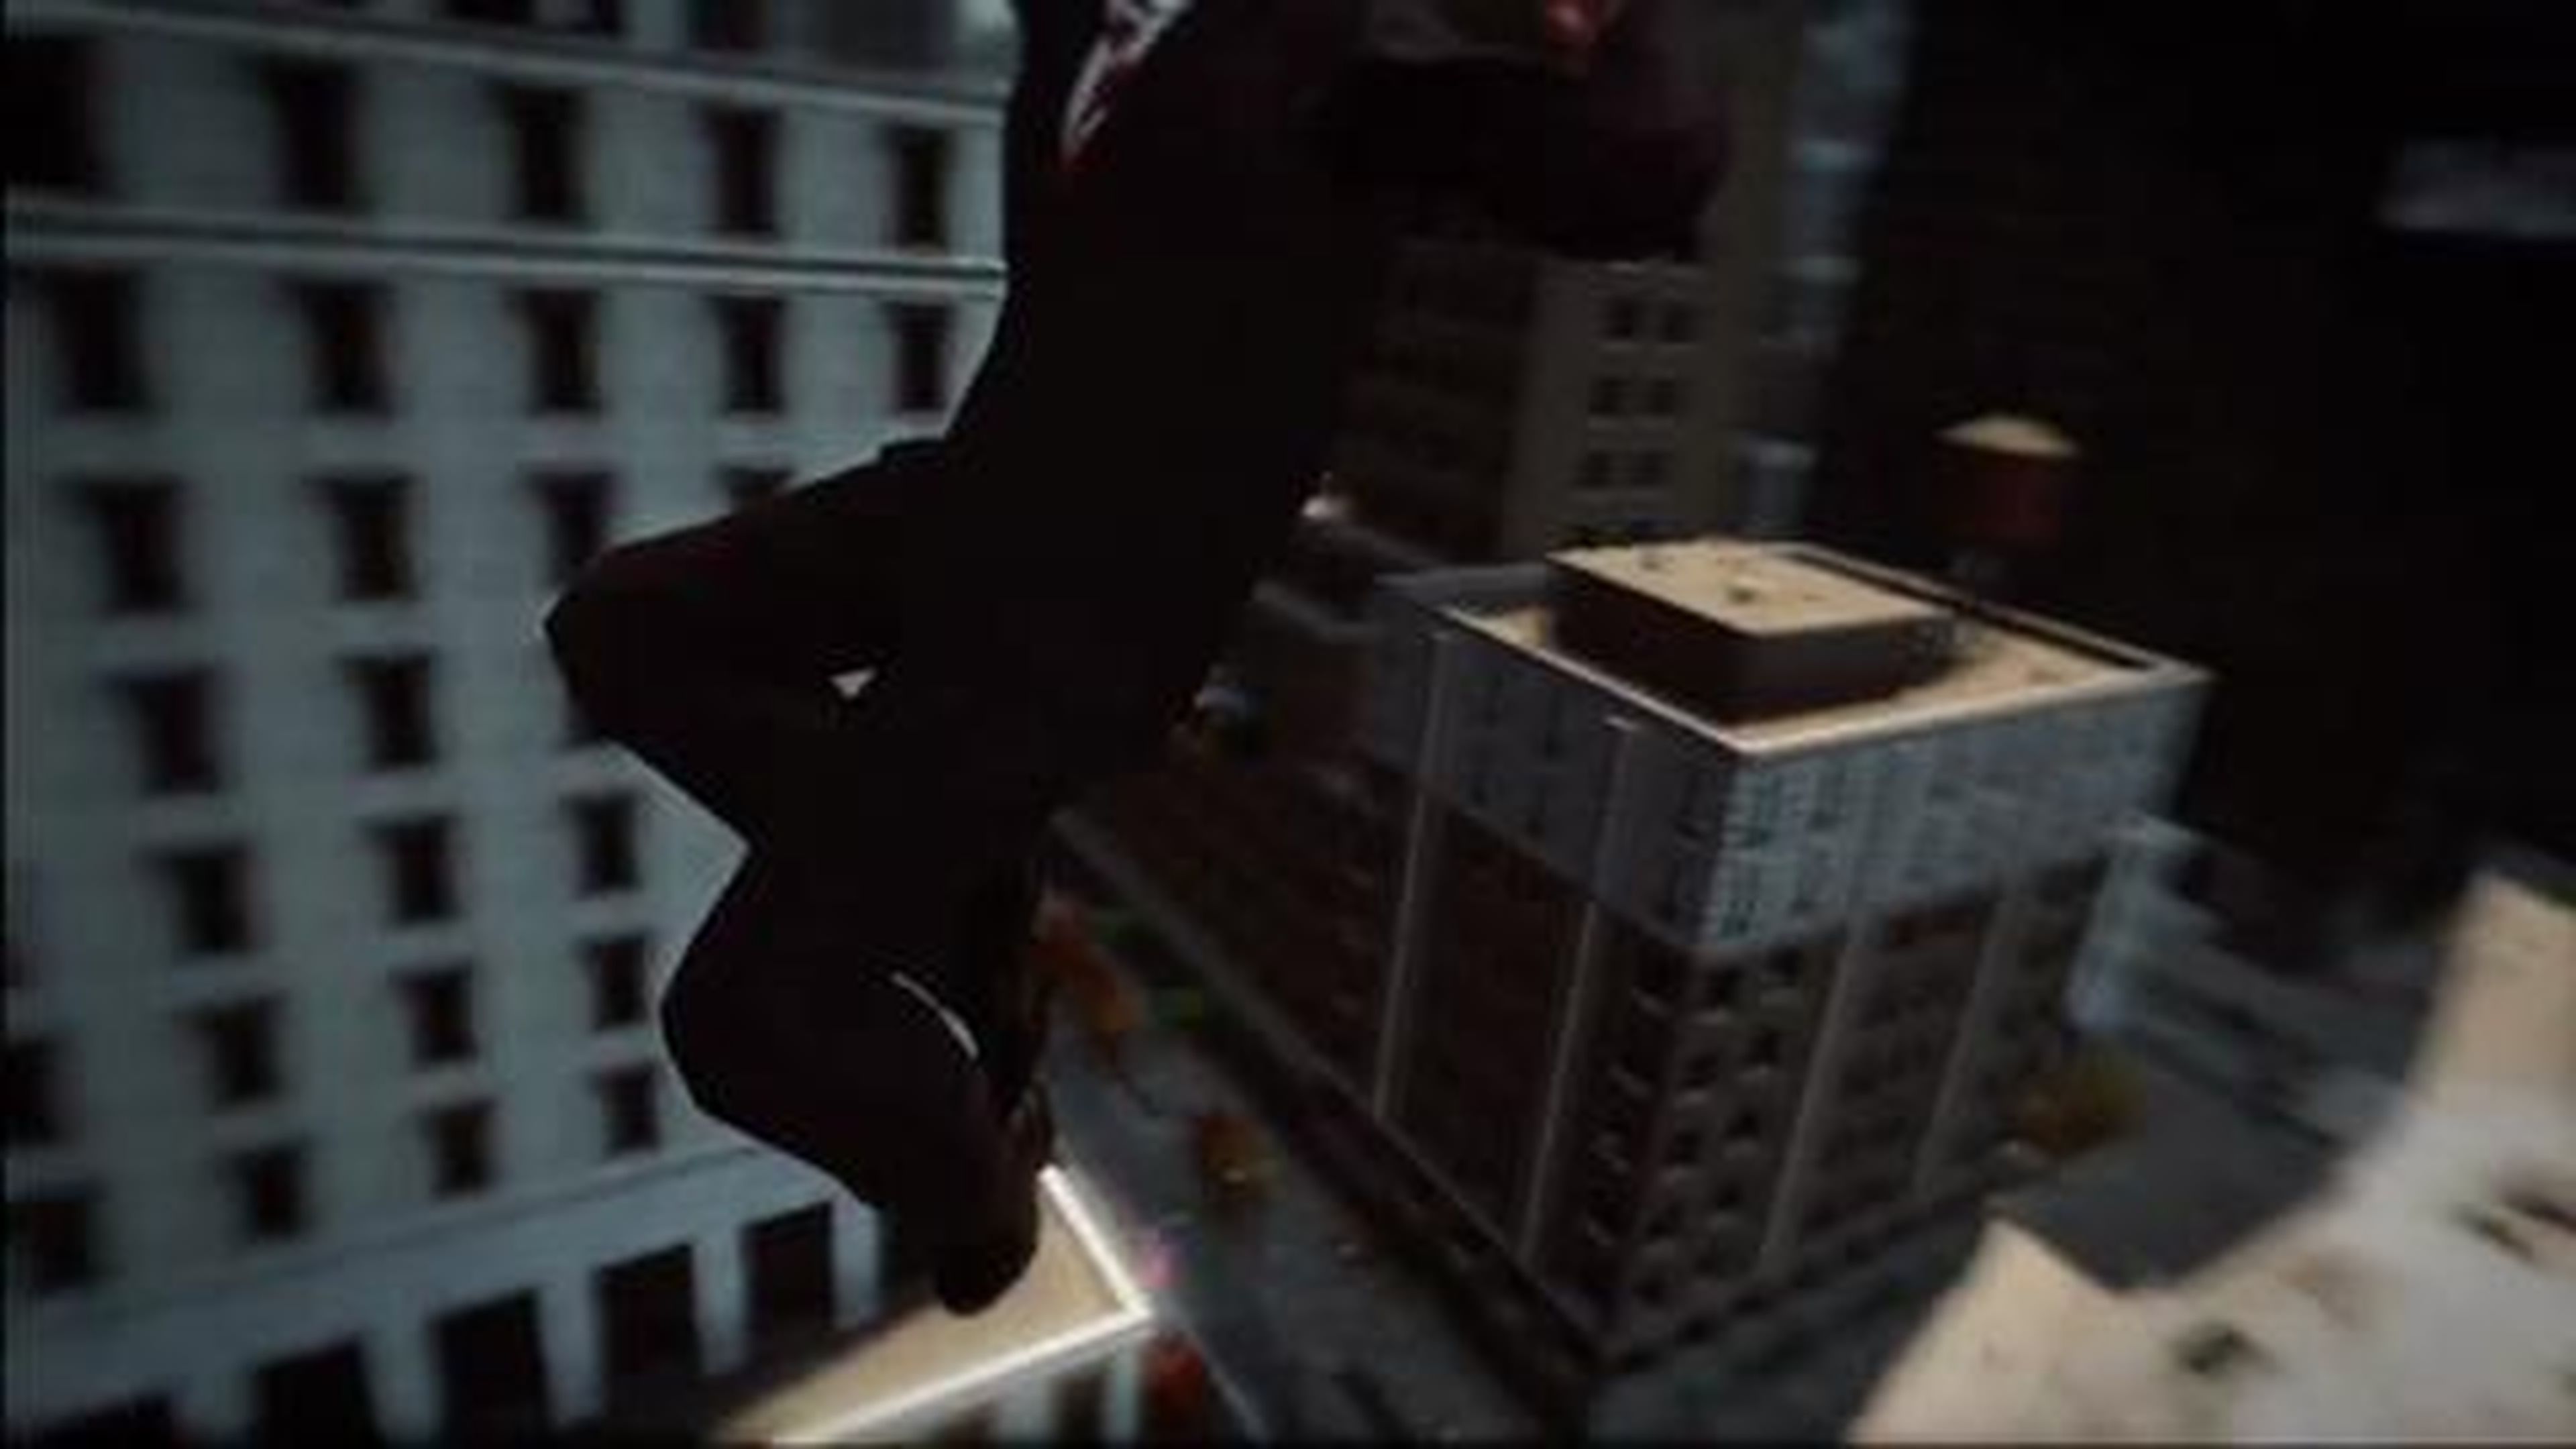 Stan Lee - The Amazing Spider-Man Reveal Trailer (HD) en HobbyNews.es